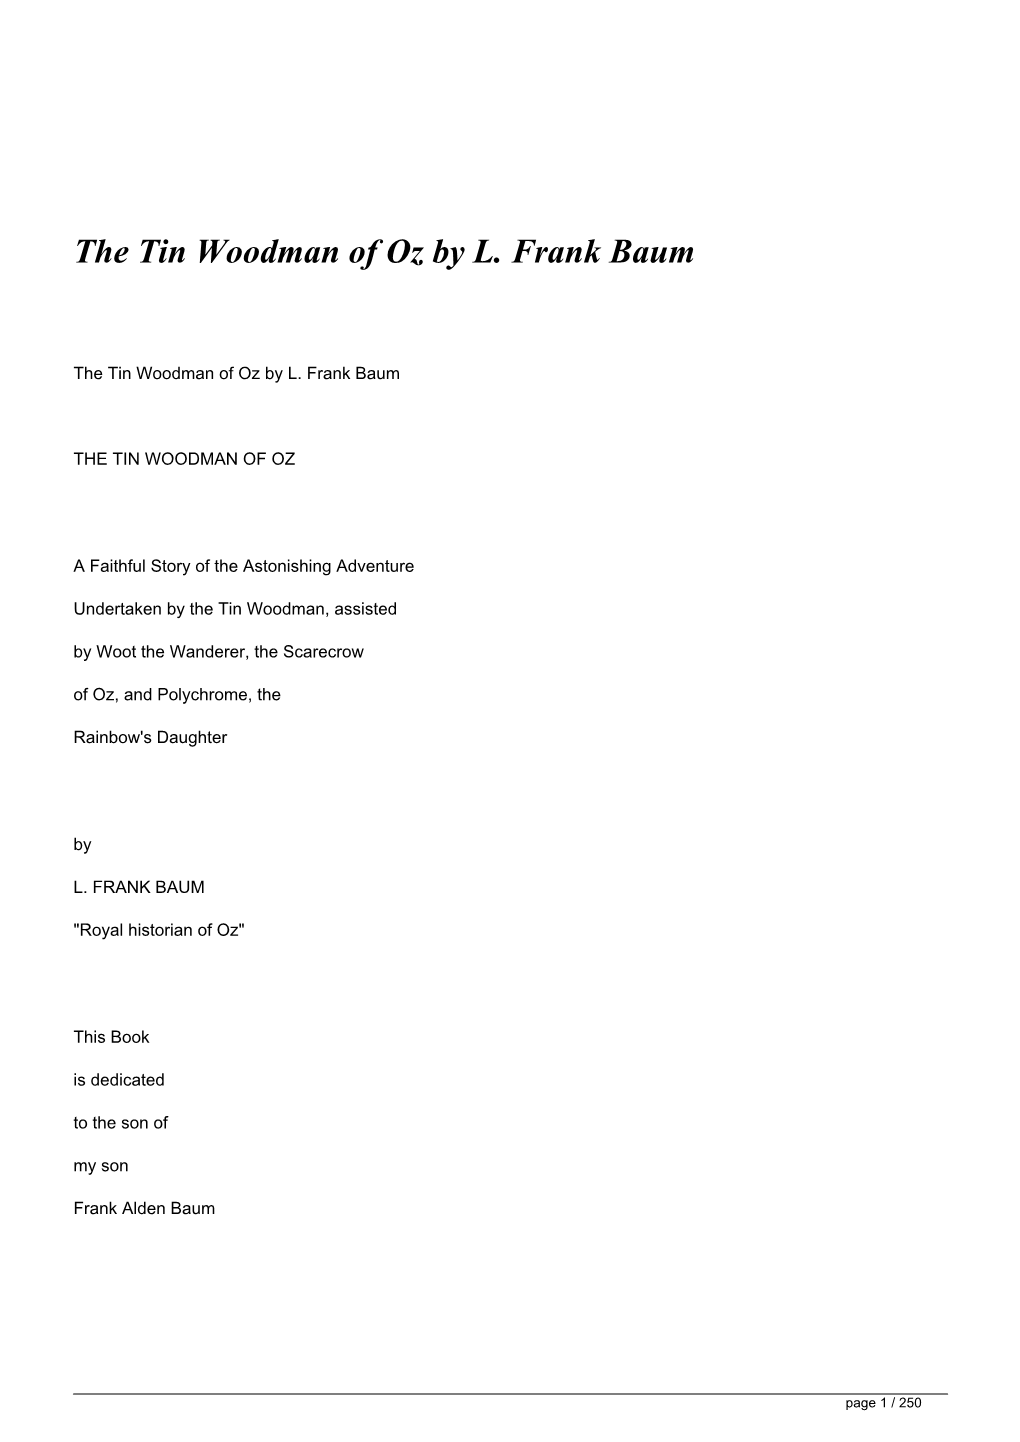 The Tin Woodman of Oz by L. Frank Baum&lt;/H1&gt;